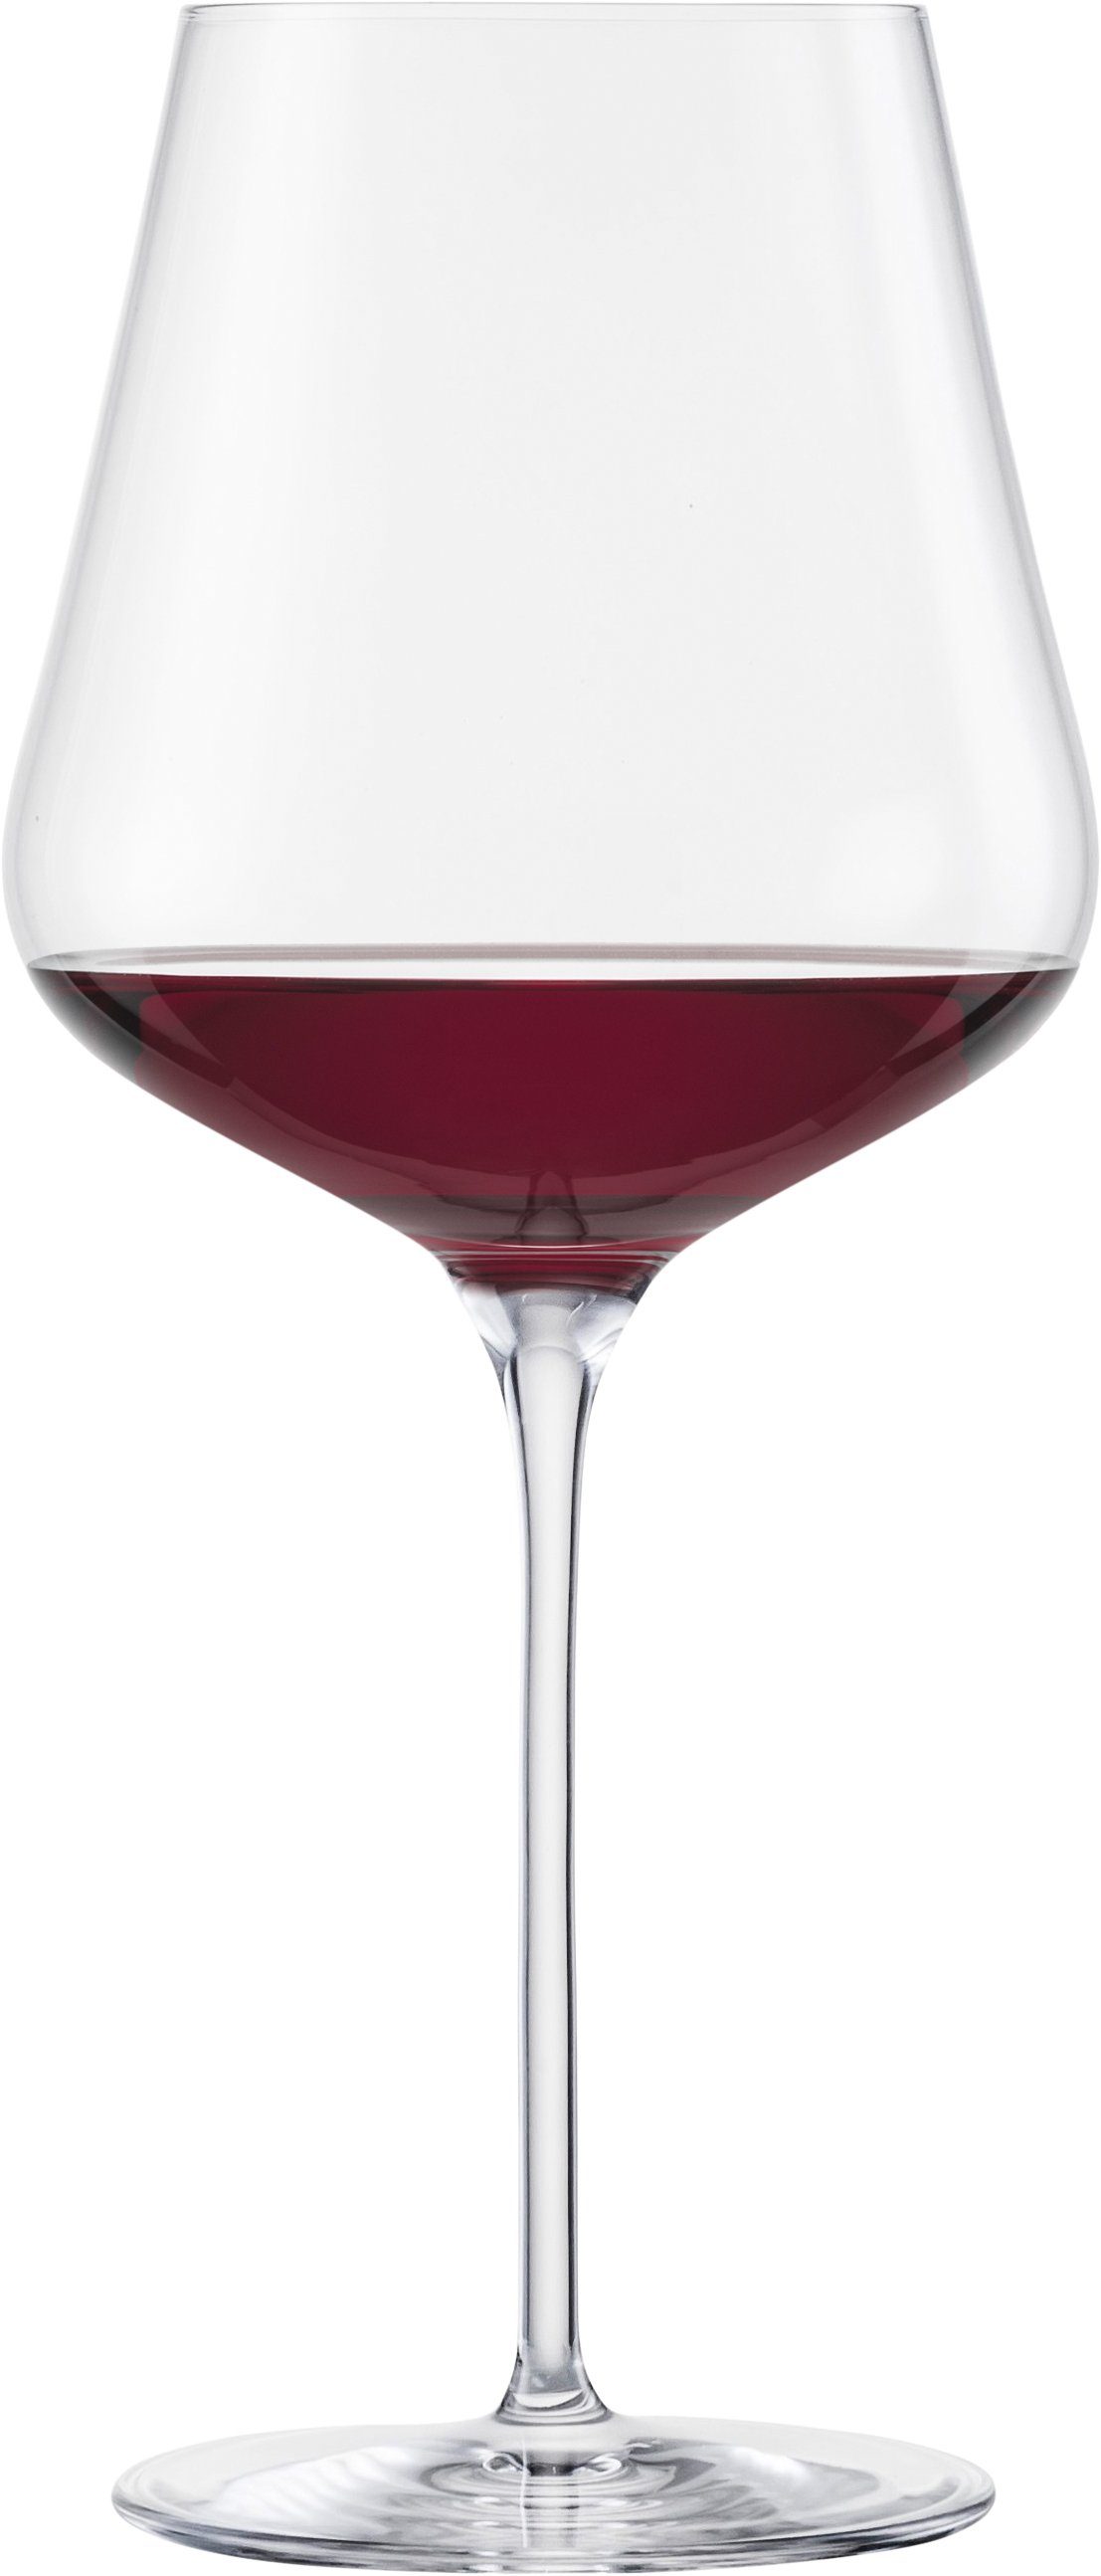 Eisch Rotweinglas SkySensisPlus, Kristallglas, (Burgunderglas), bleifrei,  710 ml, 4-teilig | Gläser